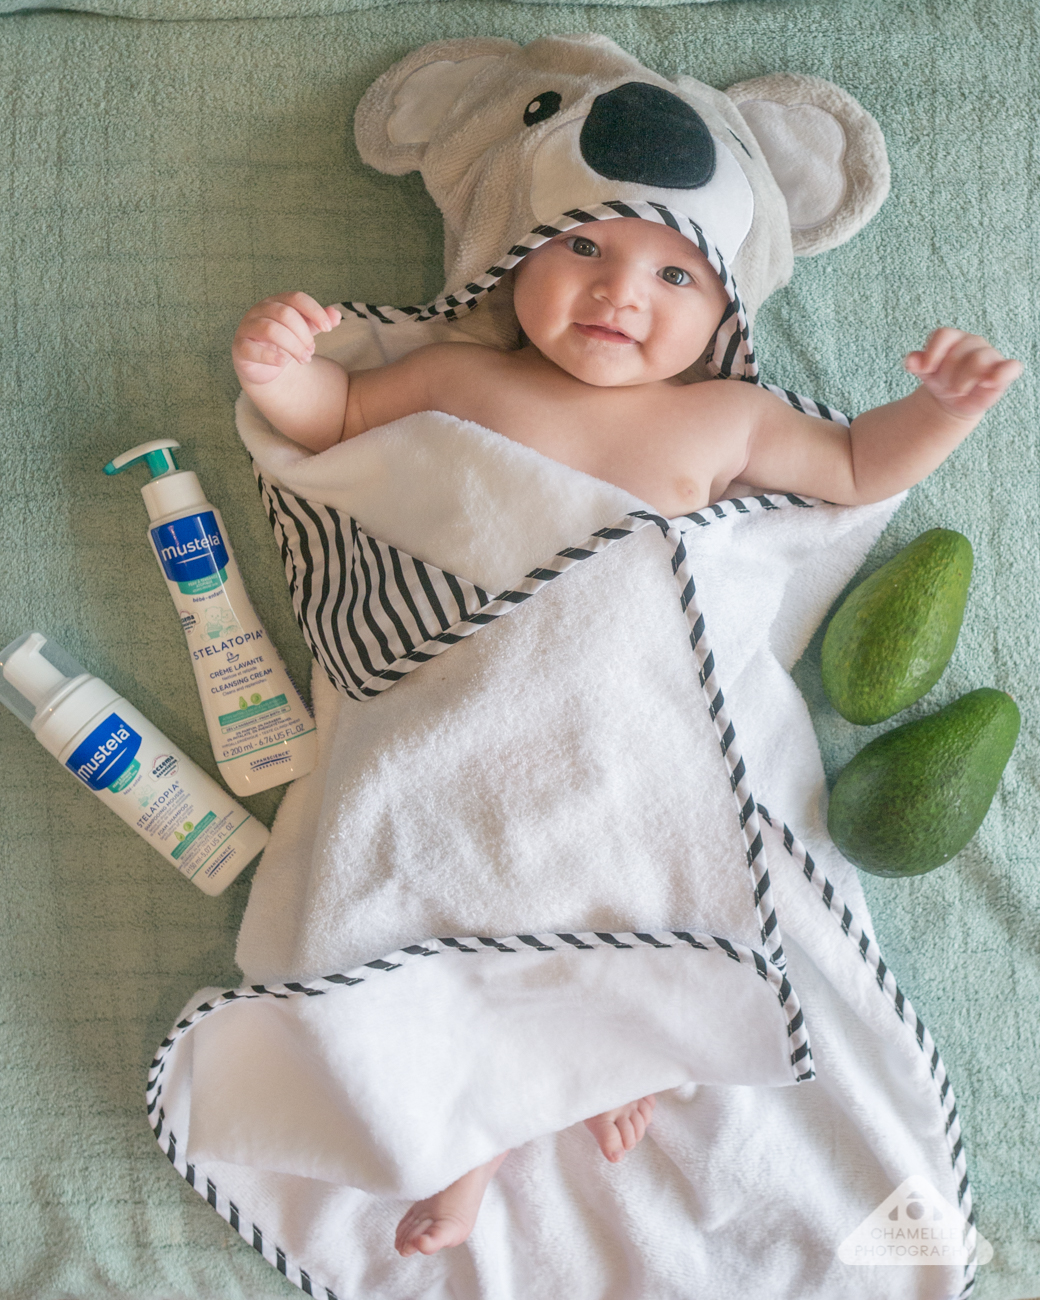 Bubba Blue Koala baby towel Mustela baby skincare Stelatopia eczema